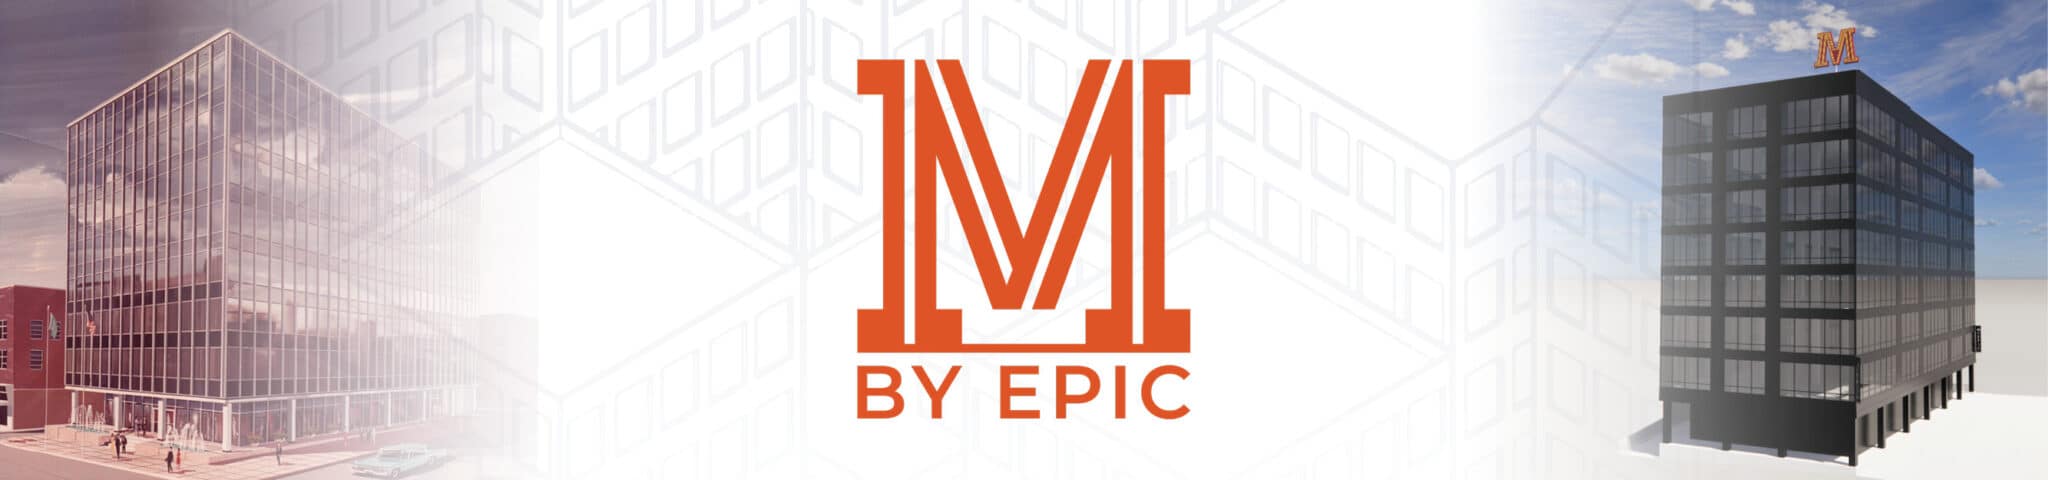 M by EPIC Blog Header